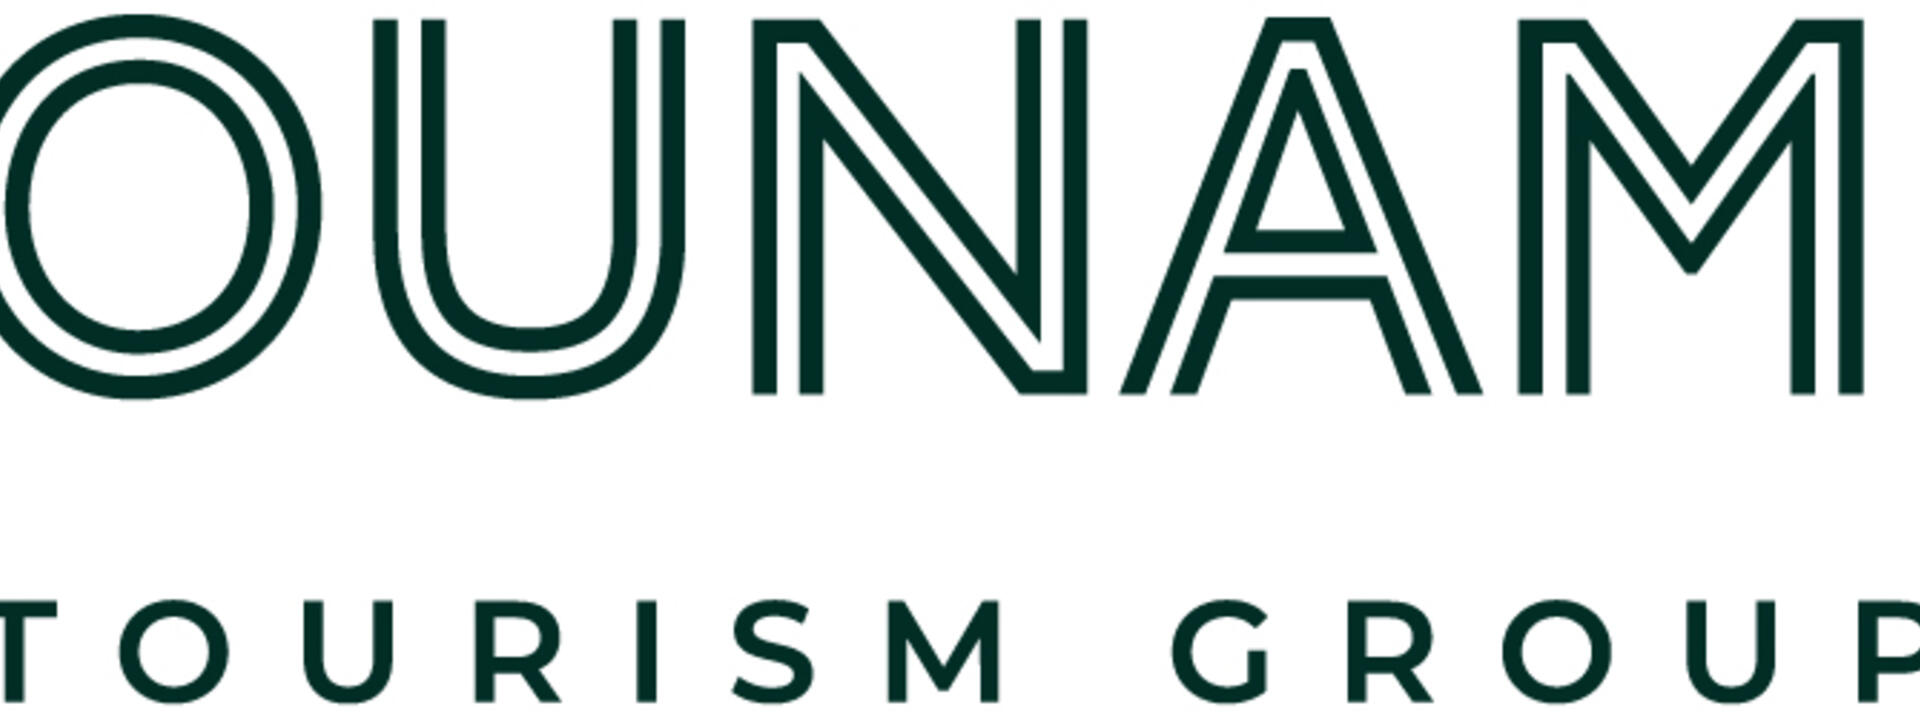 Pounamu_Green Logo.jpg